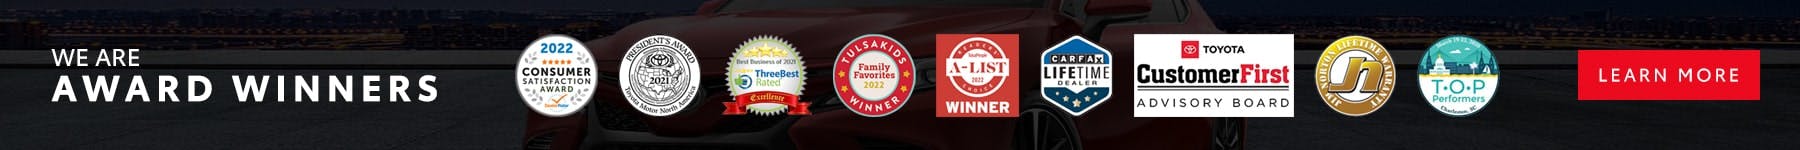 Award Winners | Jim Norton Toyota